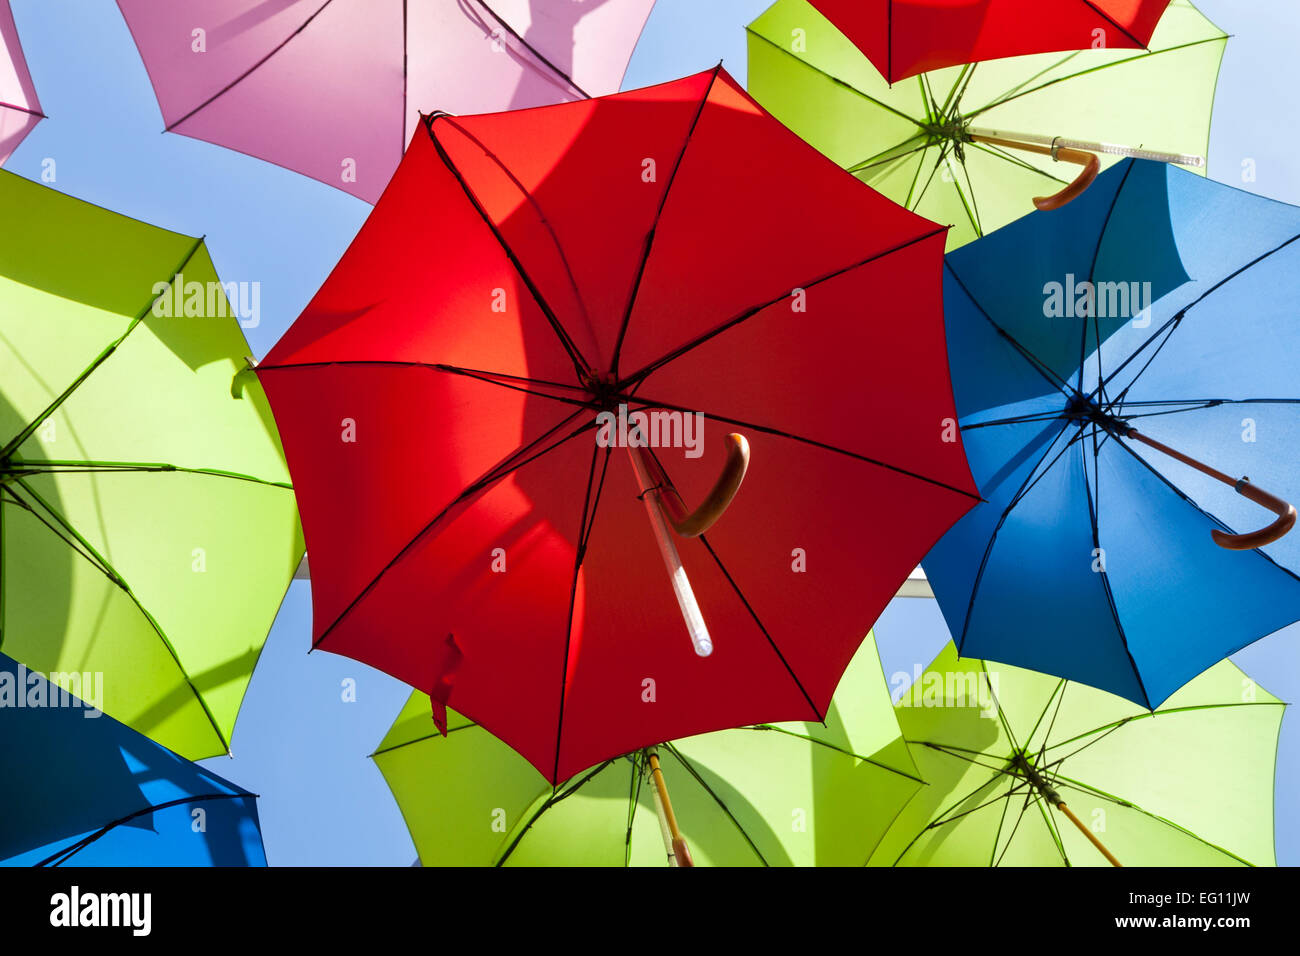 Regenschirm kunst -Fotos und -Bildmaterial in hoher Auflösung – Alamy